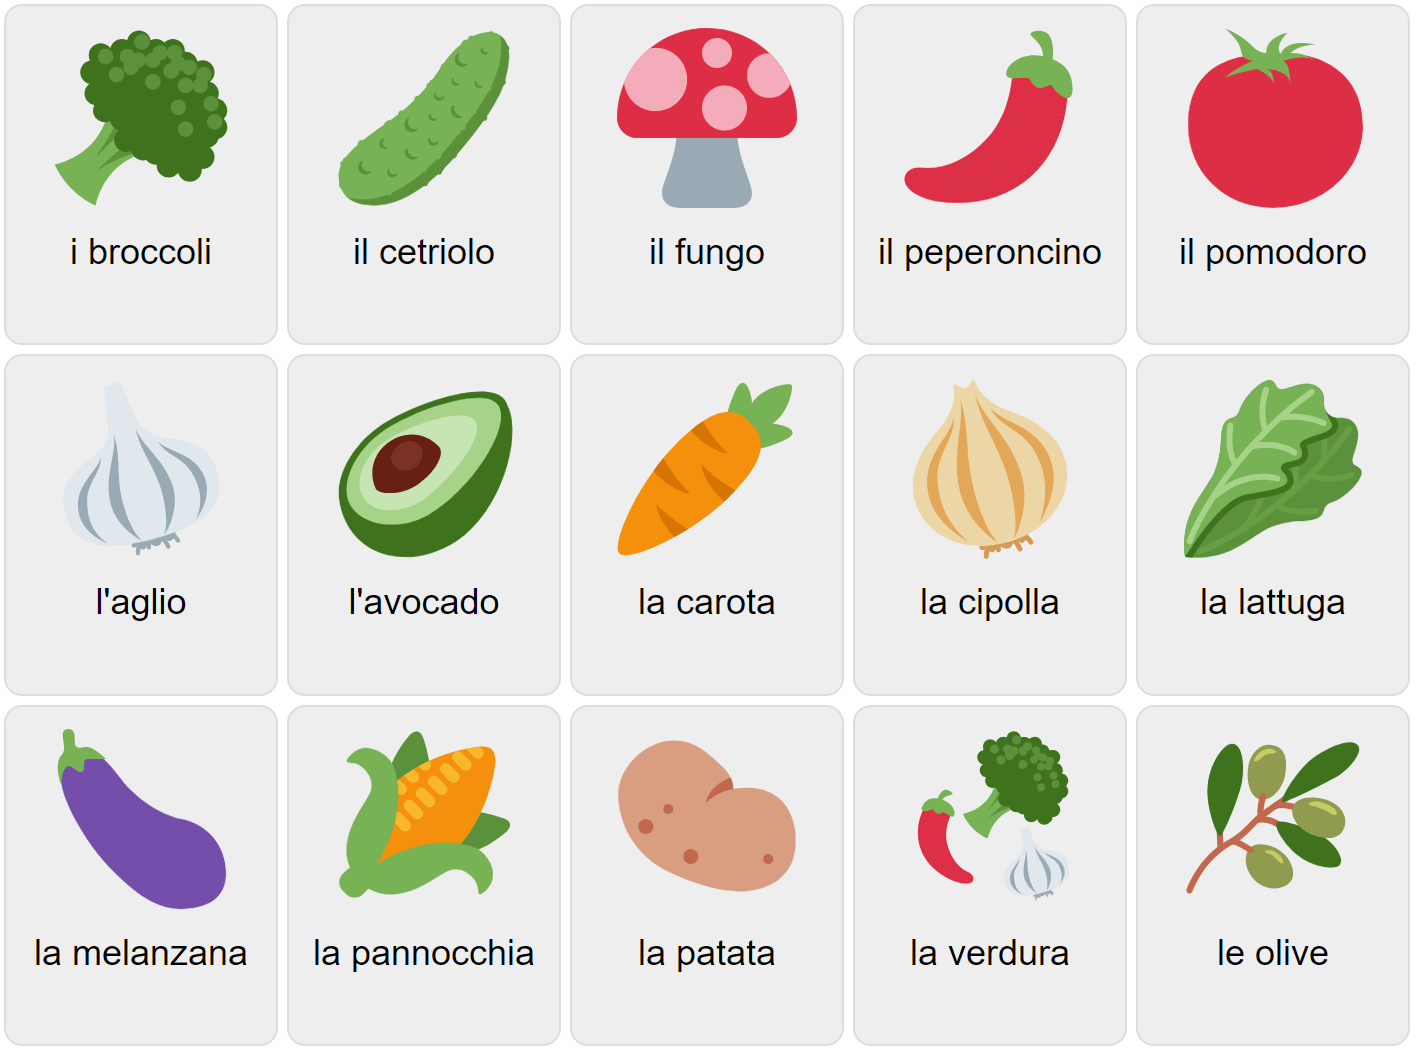 Vegetables in Italian